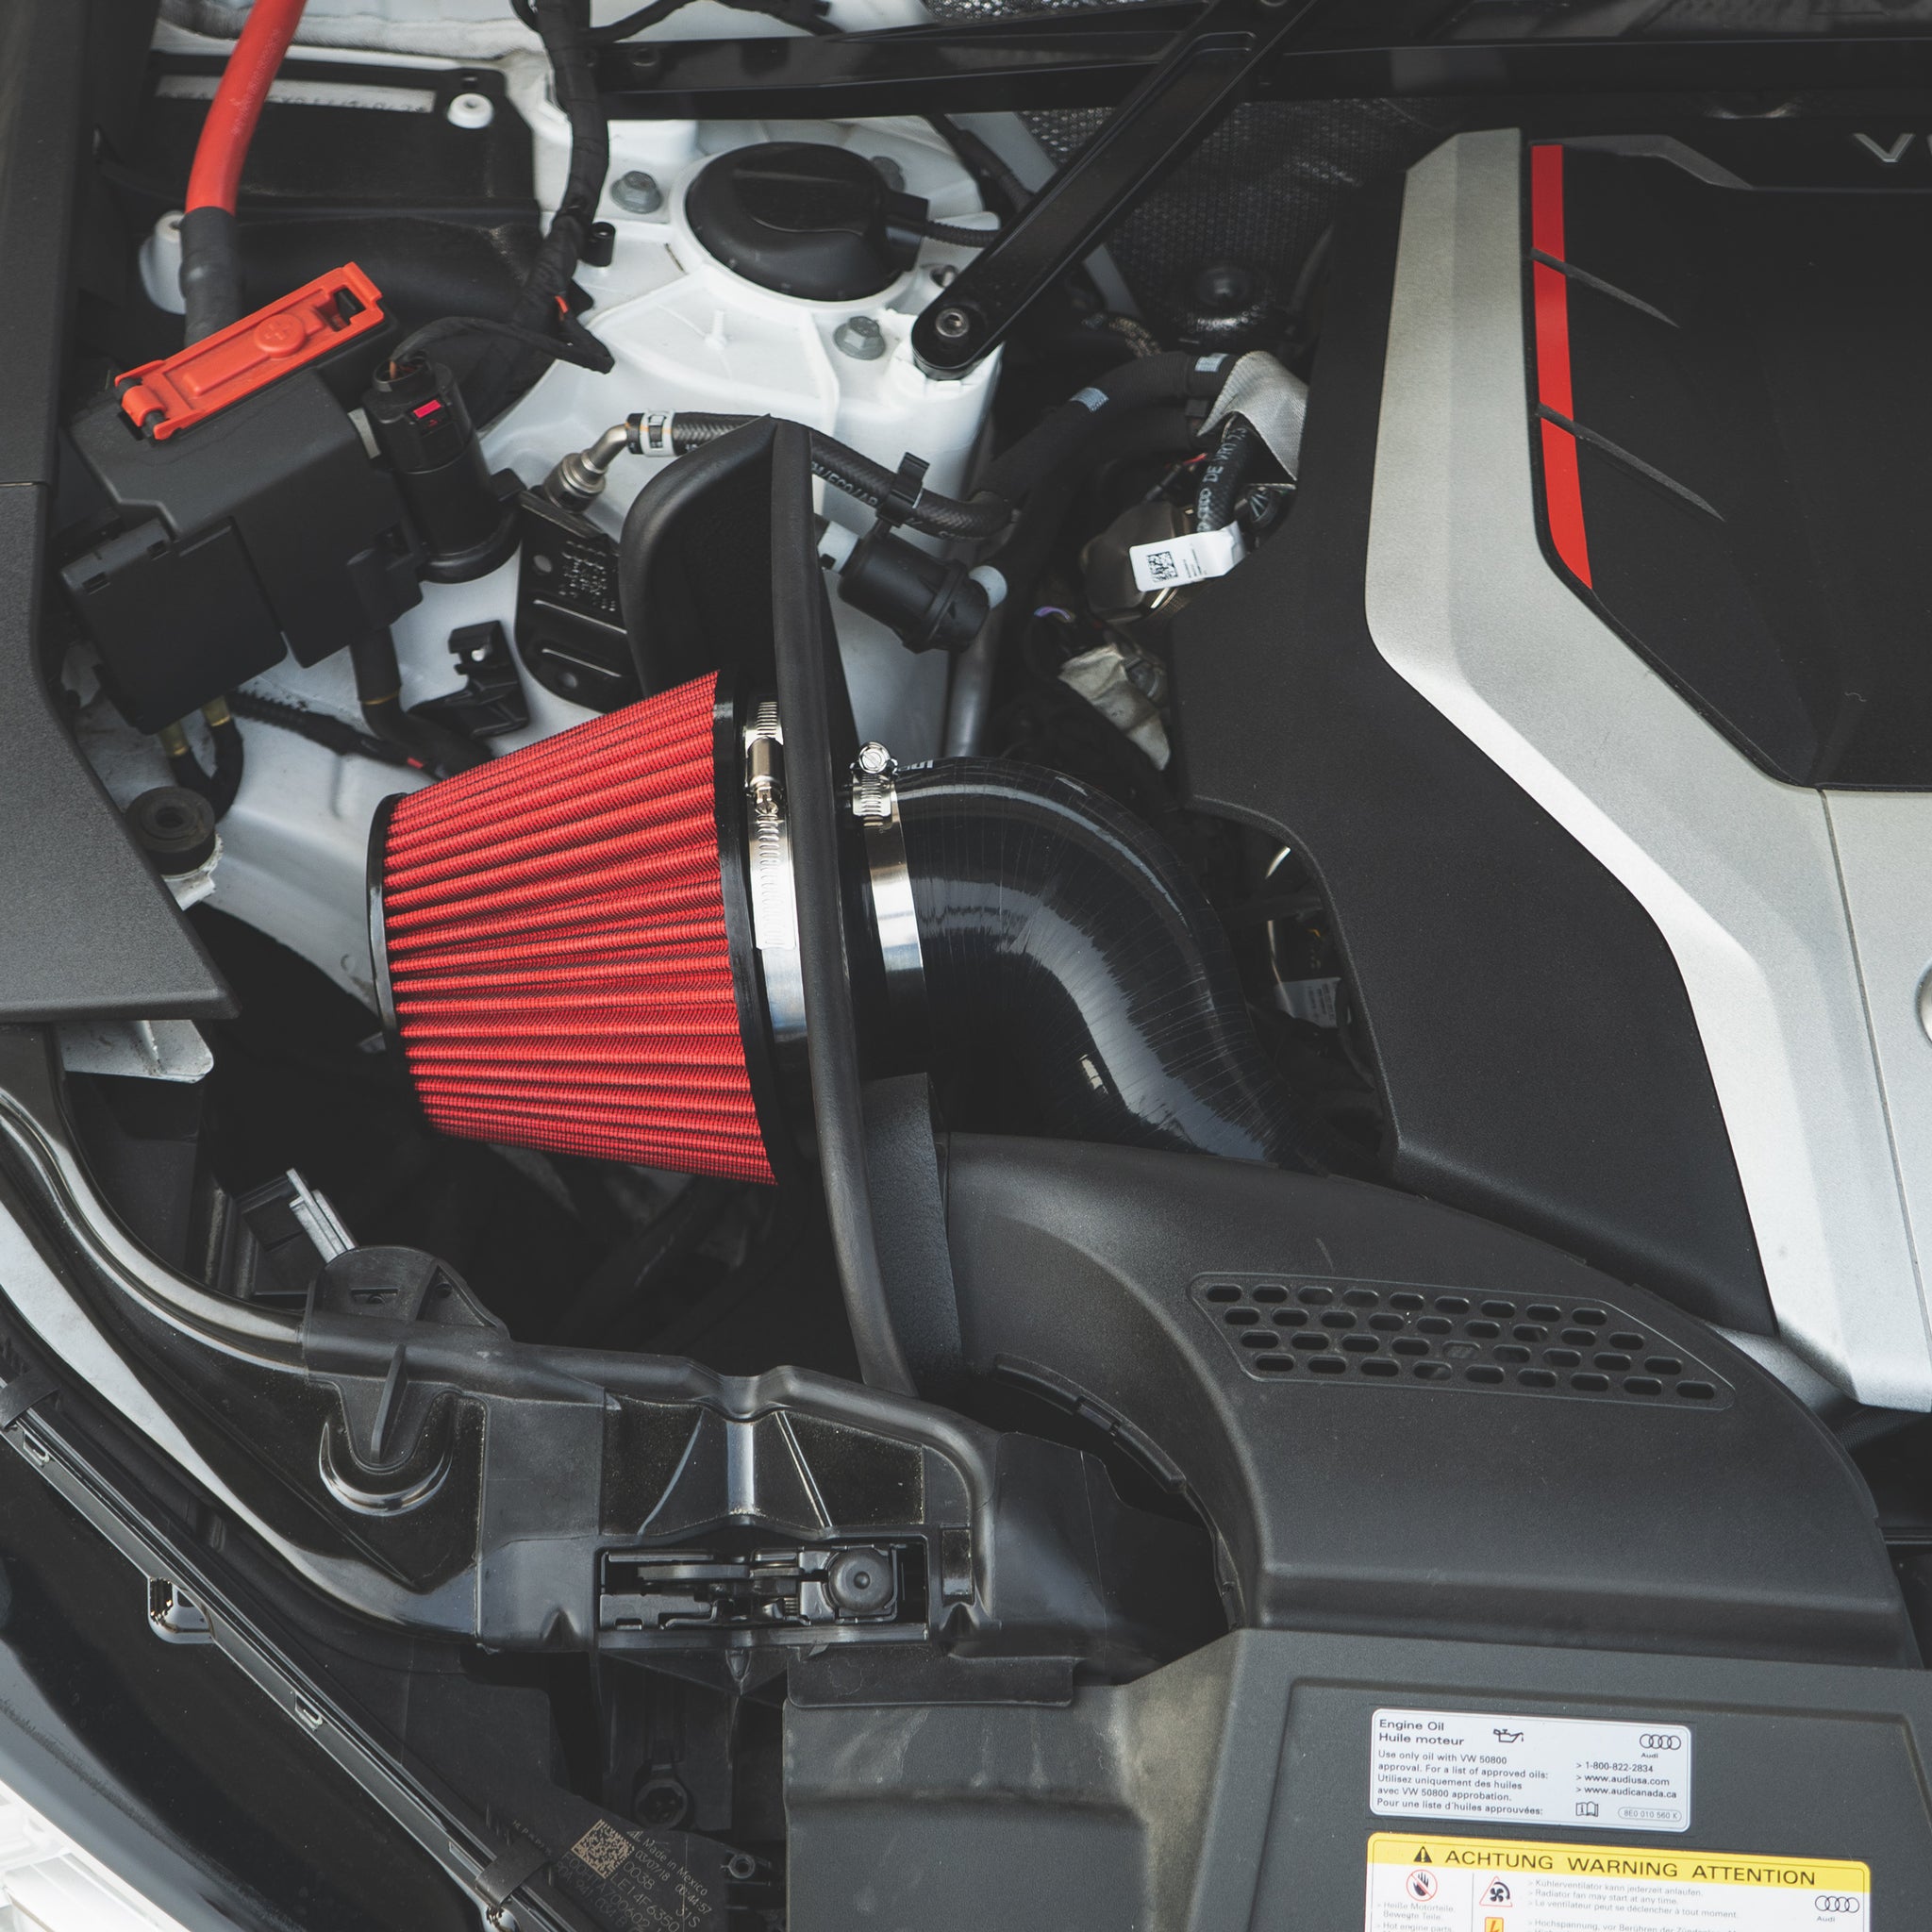 CTS Turbo Audi B9 SQ5 High-Flow Intake - 6 Velocity Stack